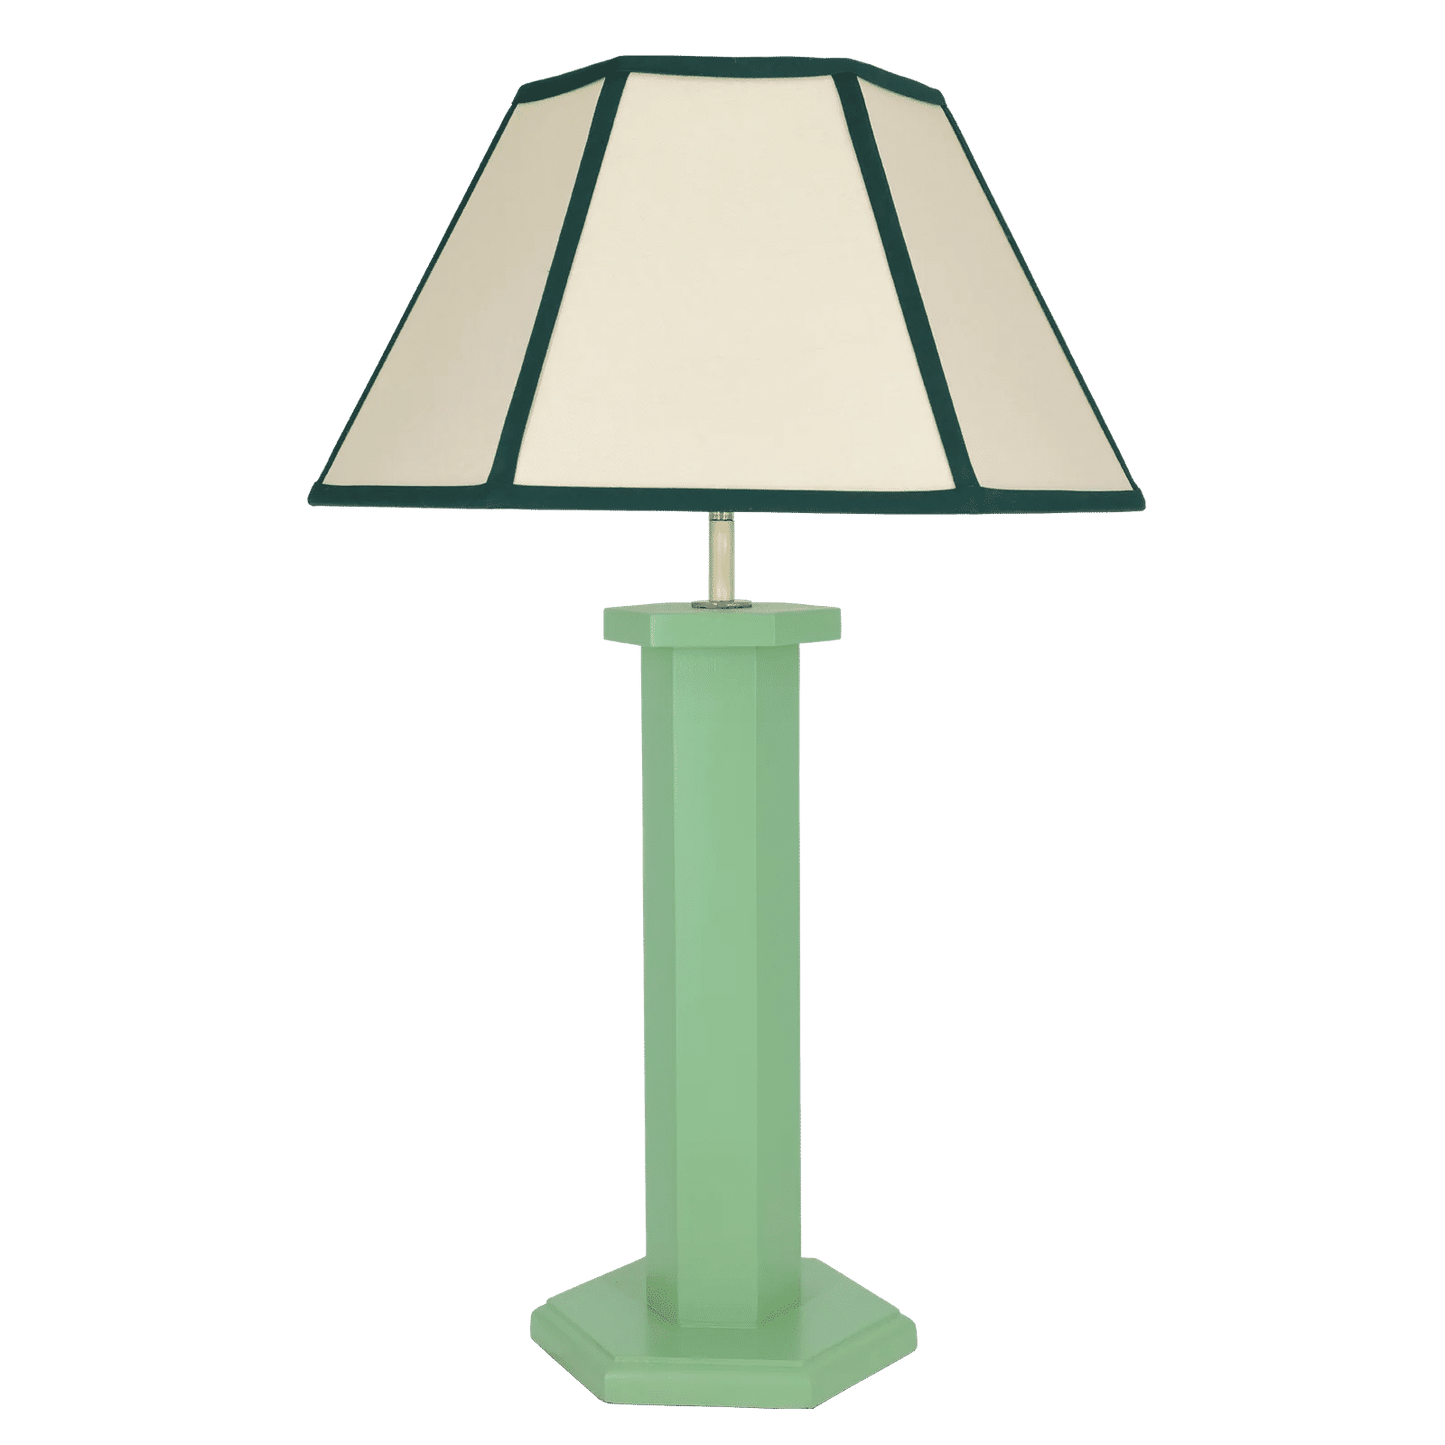 Hexagon Table Lamp - Turtle Green